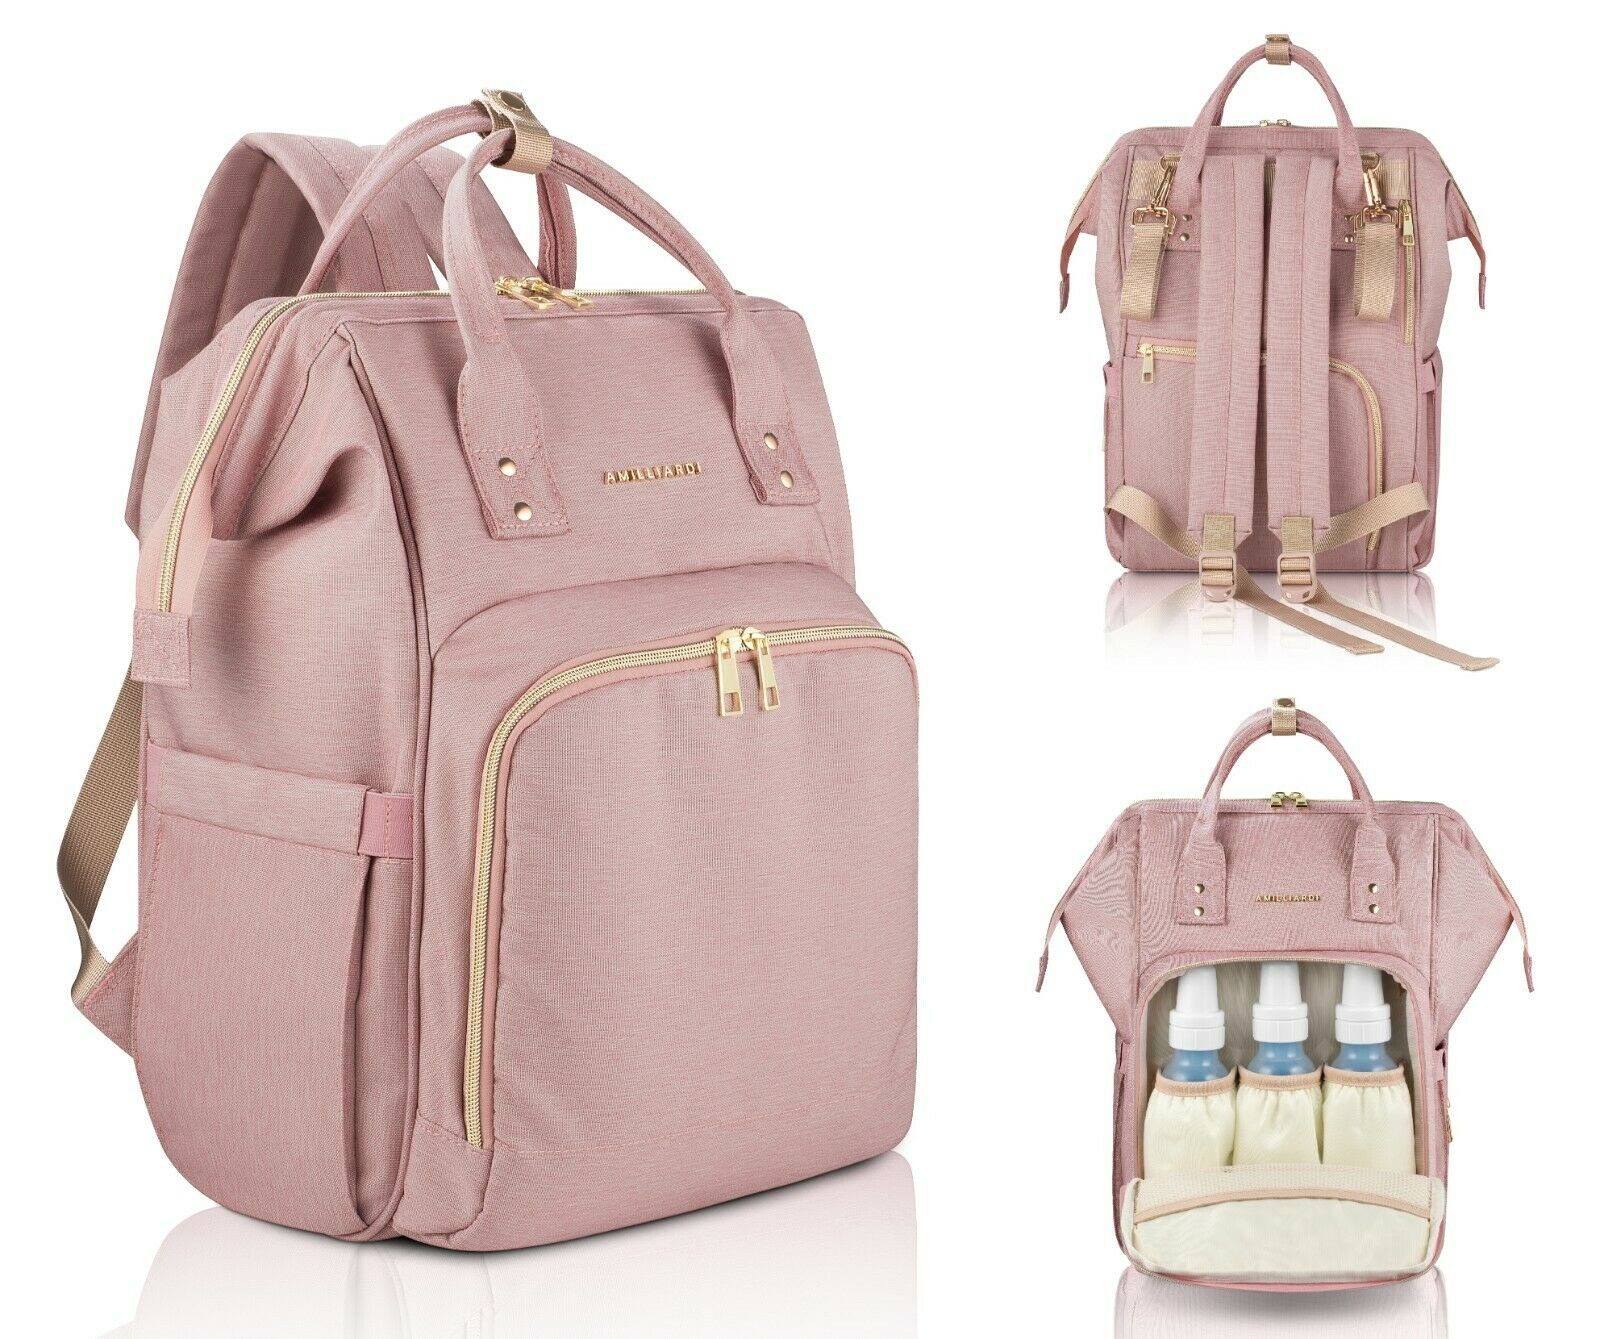 AMILLIARDI Rosé Diaper Bag Backpack - 6 INSULATED Bottle Holders